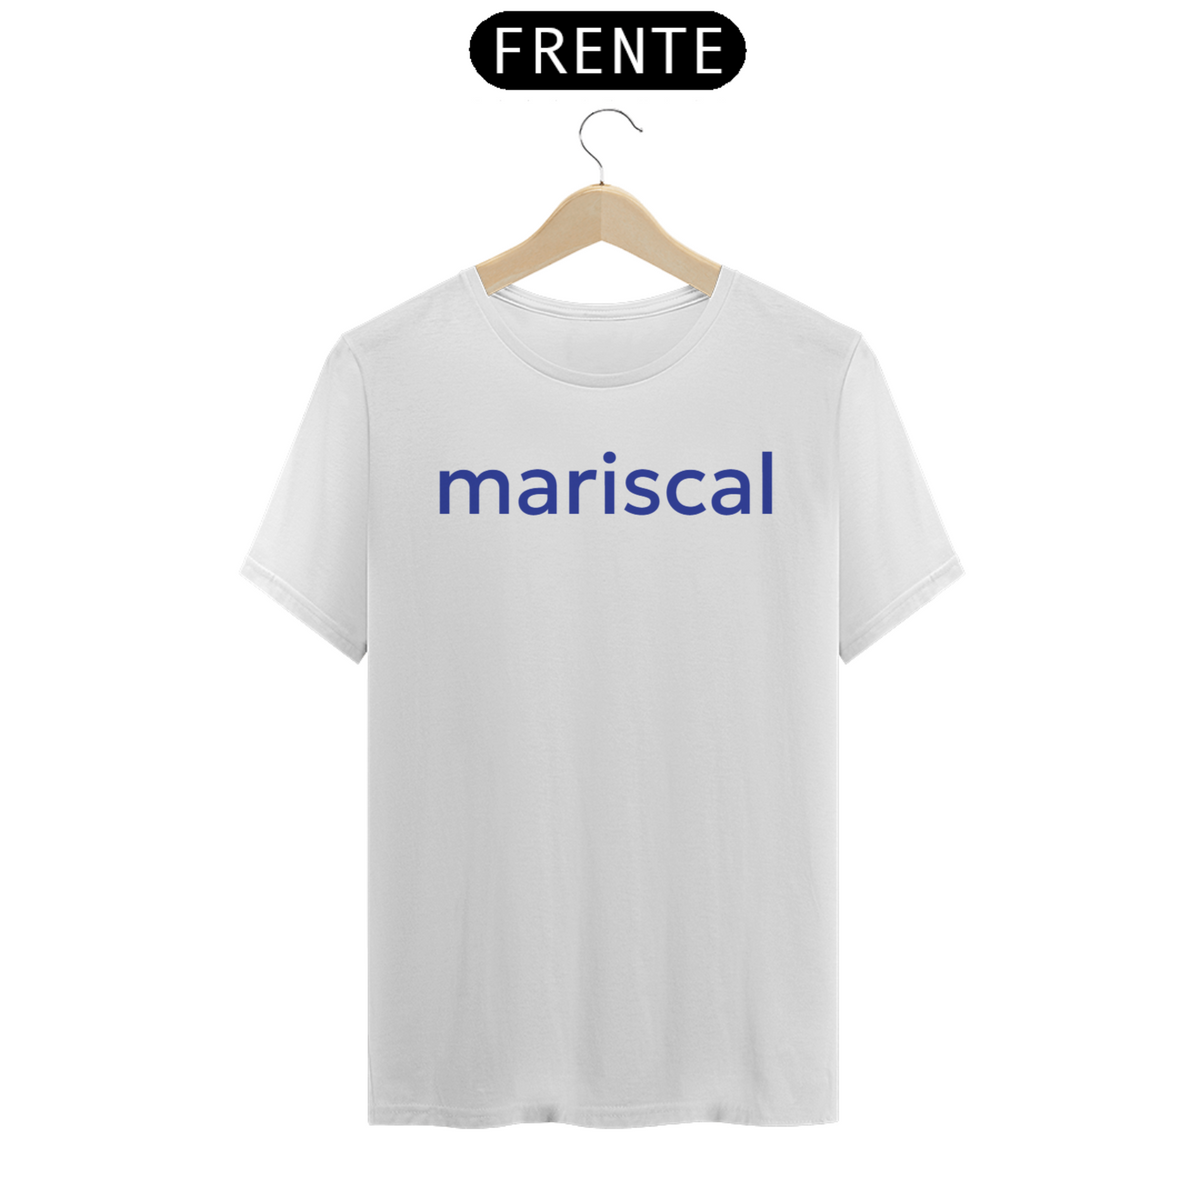 Nome do produto: Camiseta Mariscal br